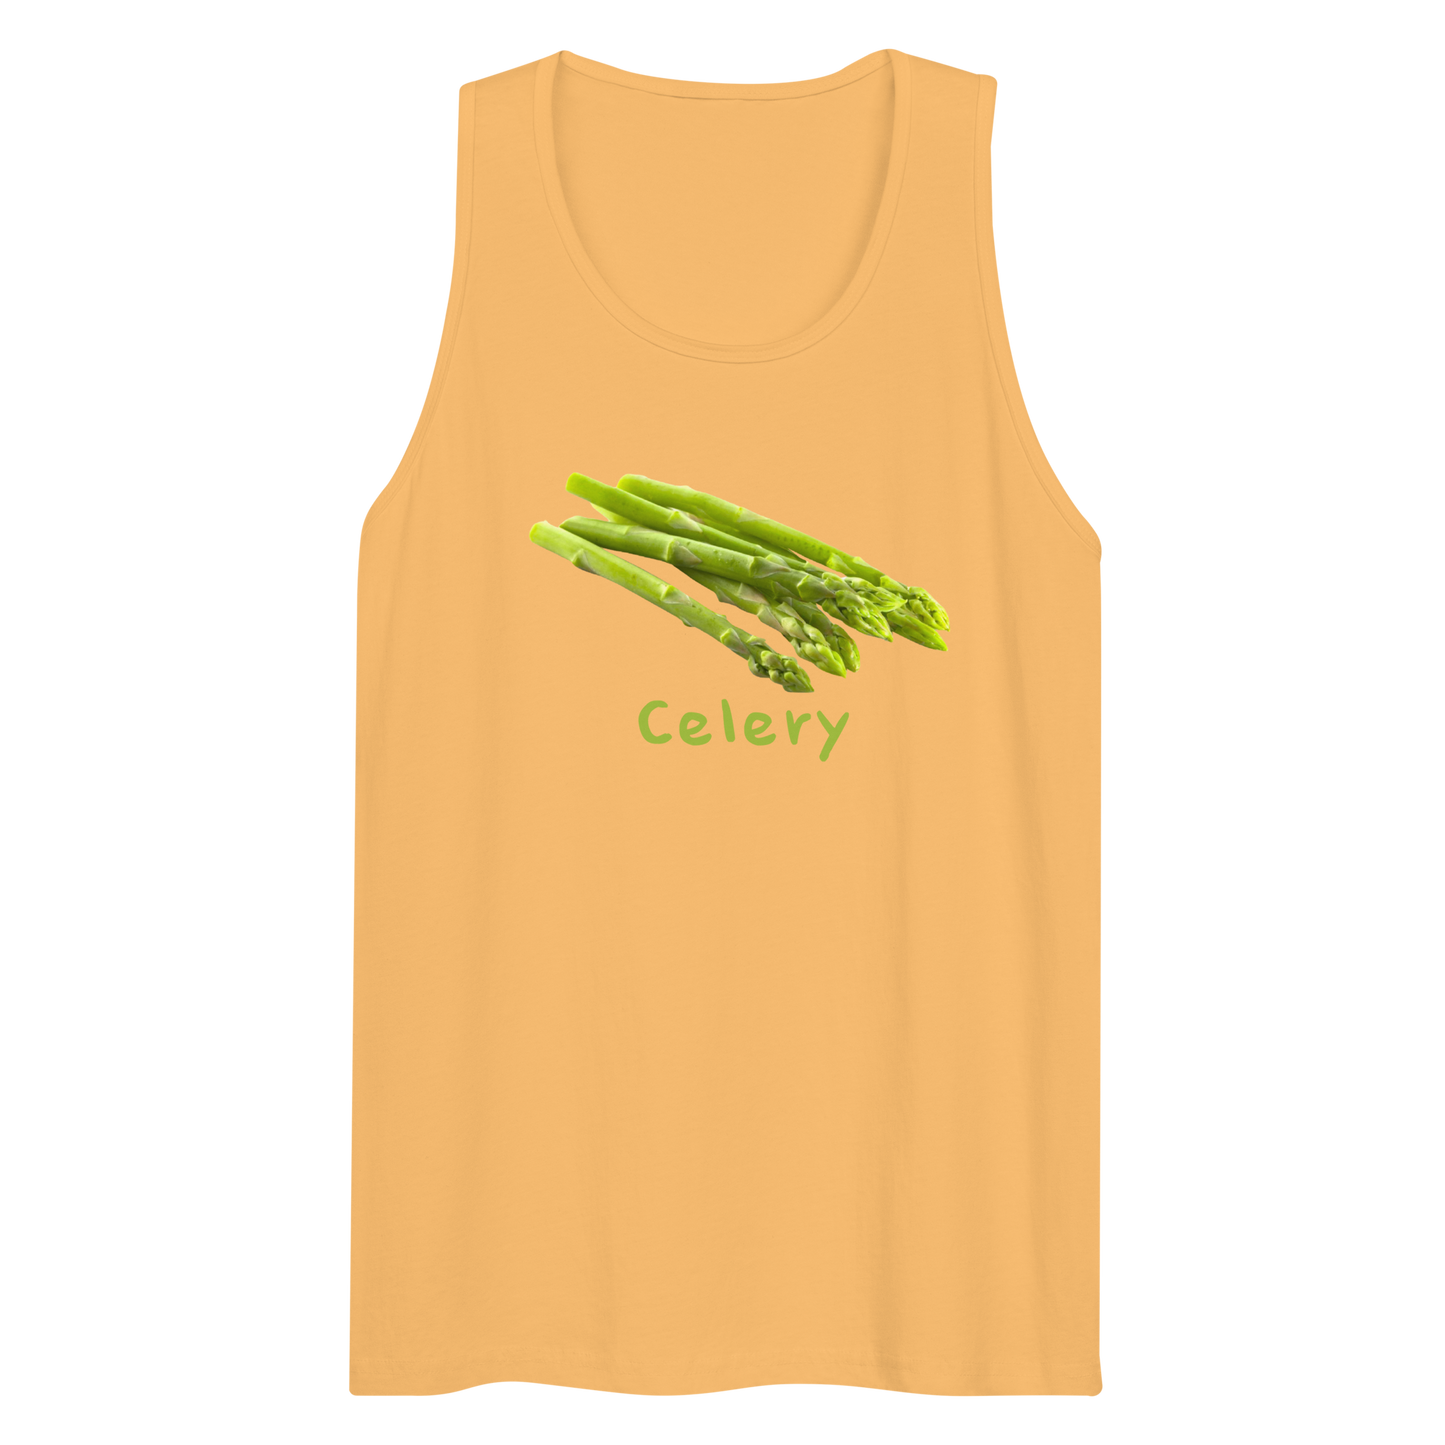 Celery Tank Top